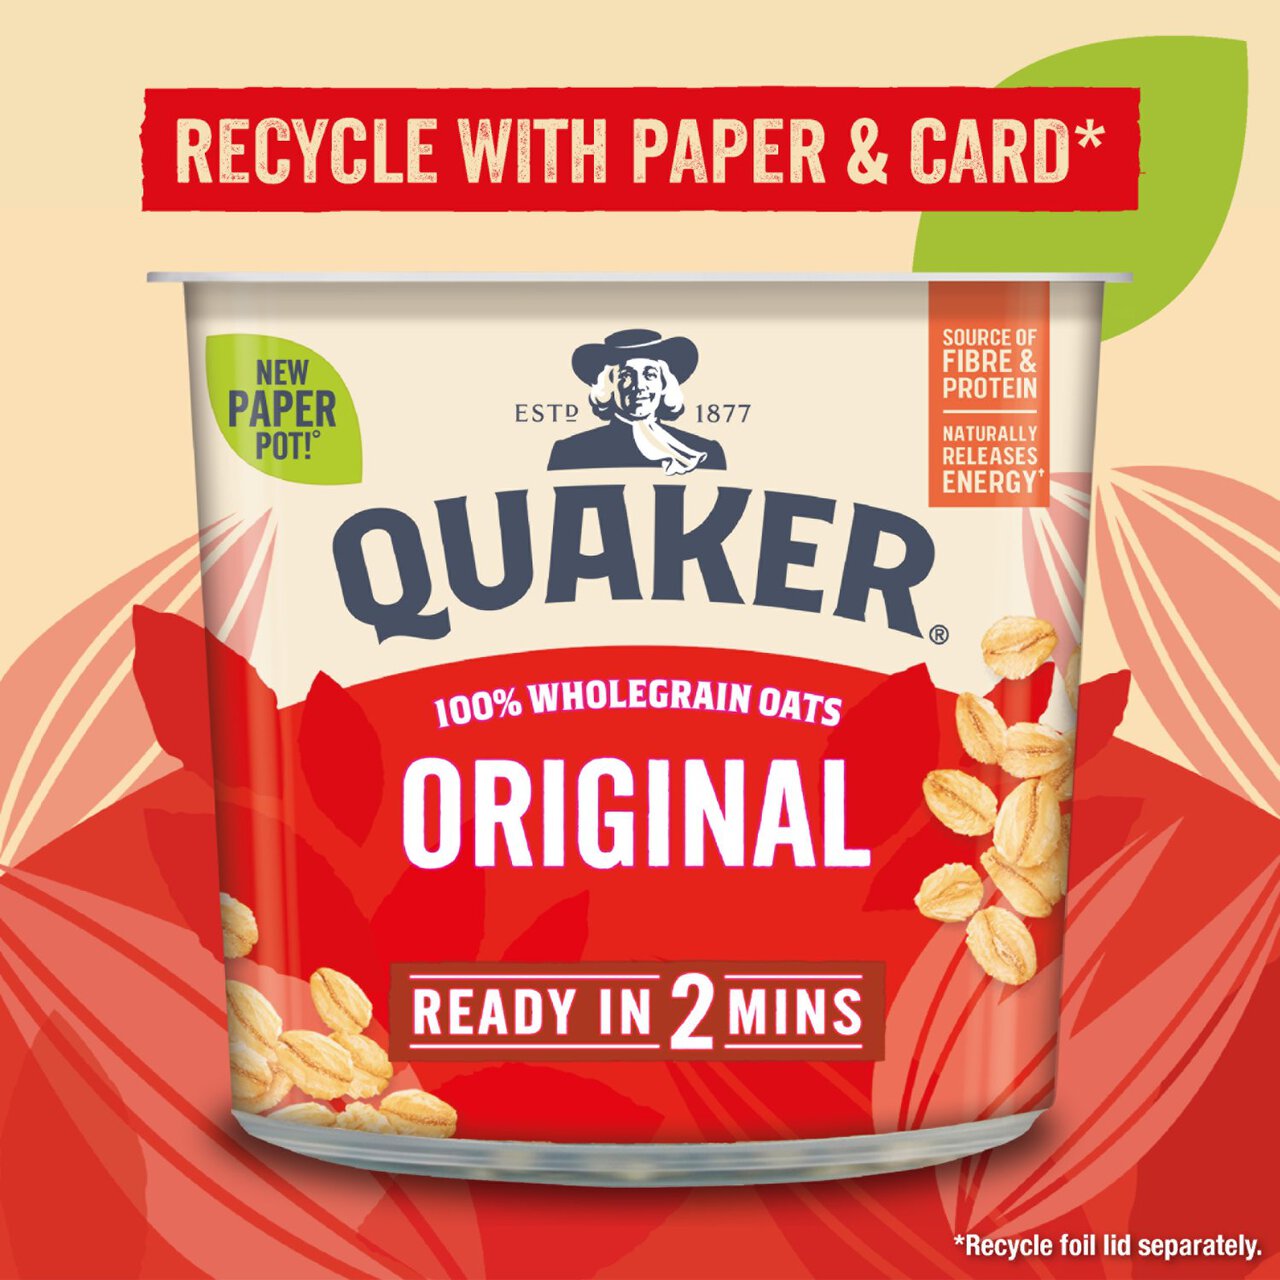 Quaker Oat So Simple Original Porridge Cereal Pot 45g